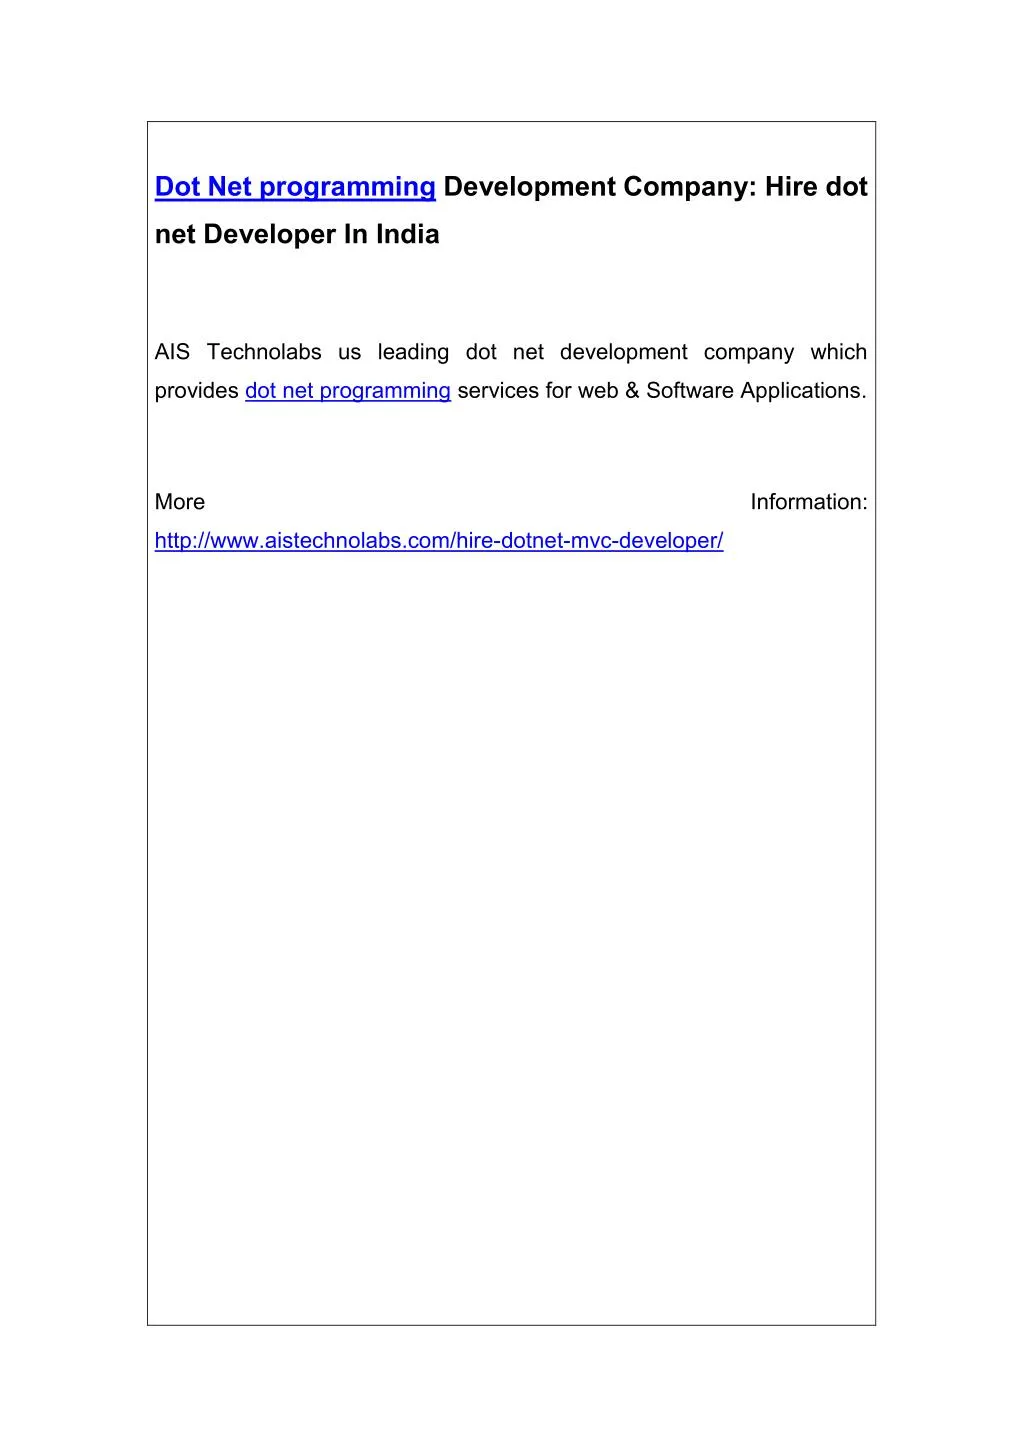 dot net programming development company hire dot